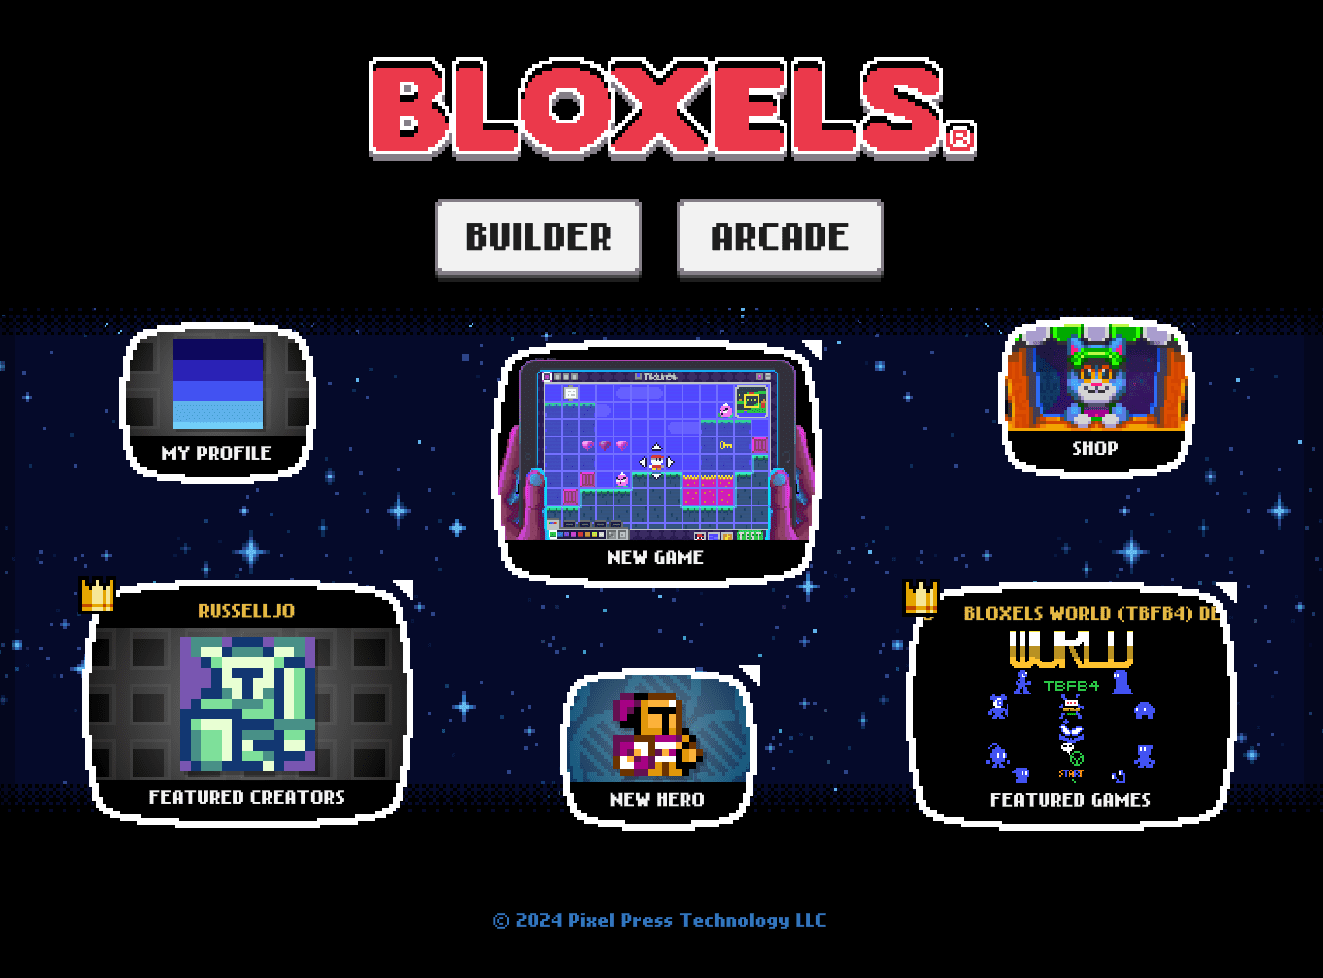 Bloxels home screen